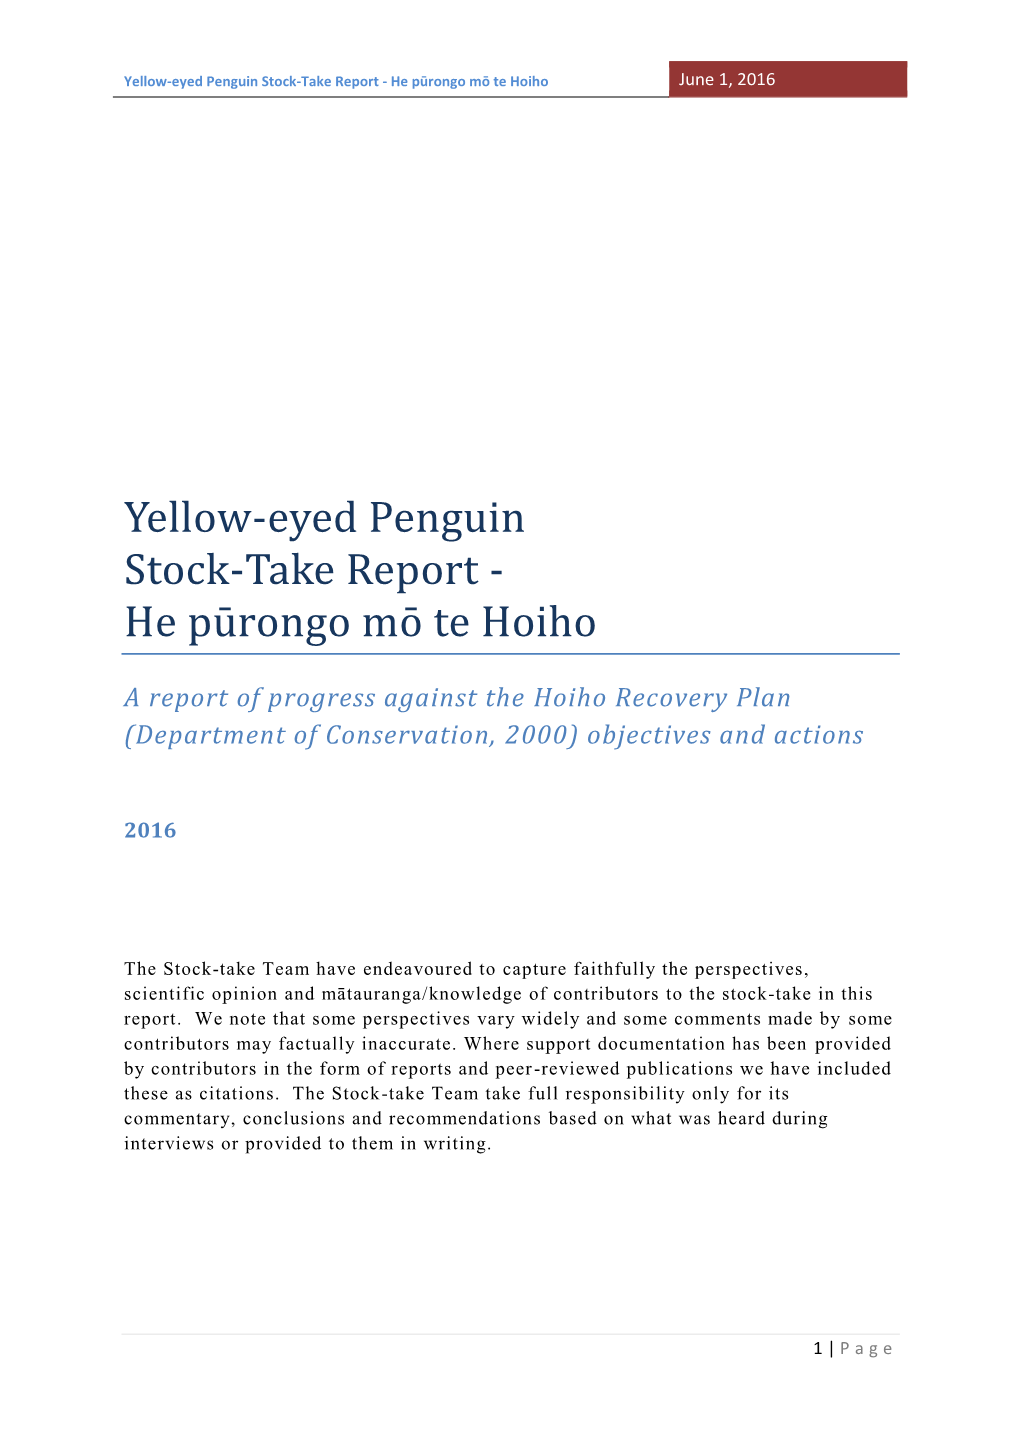 YEP Stock-Take Report June 2016